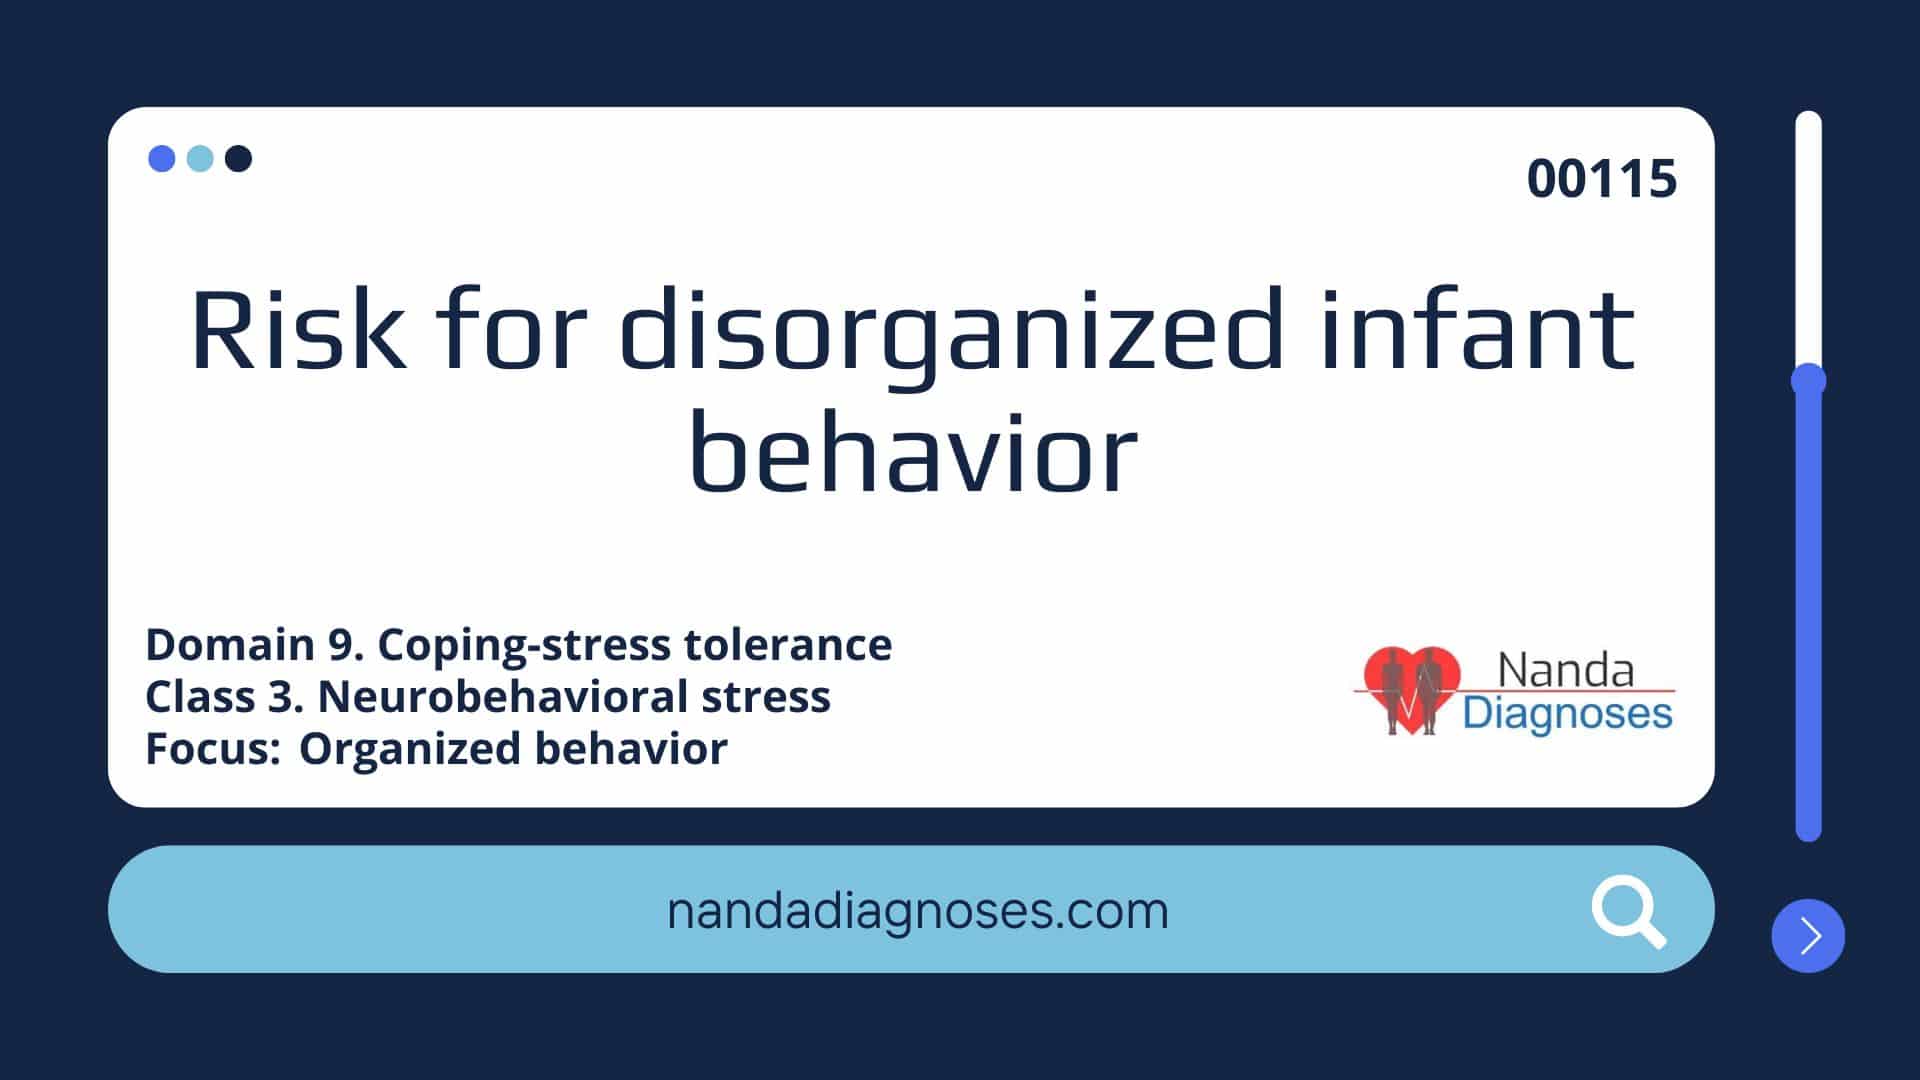 Nursing diagnosis Risk for disorganized infant behavior